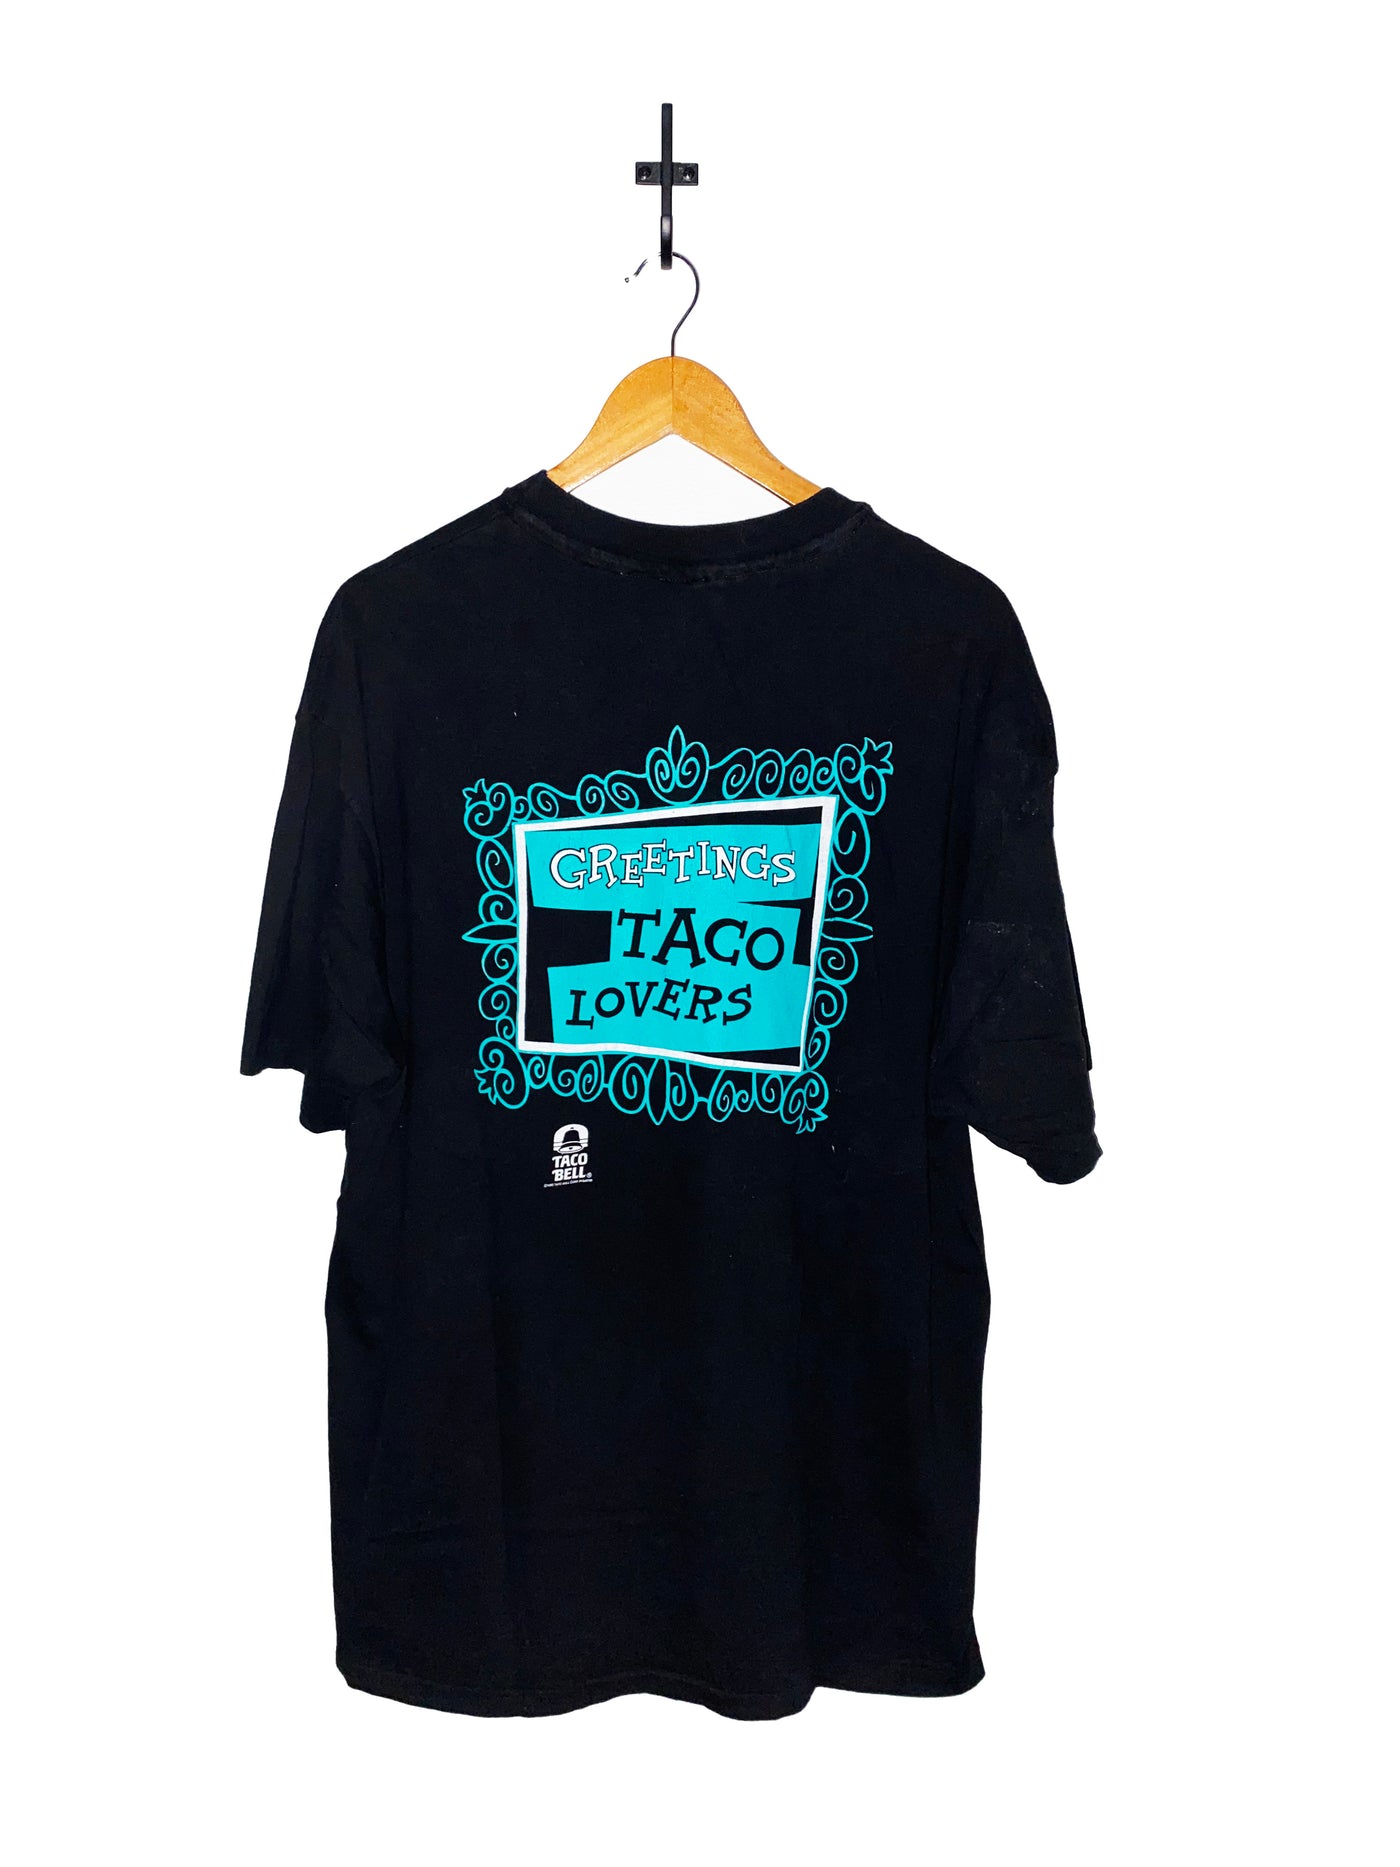 Vintage 1991 Bullwinkle Taco Bell Promo T-Shirt